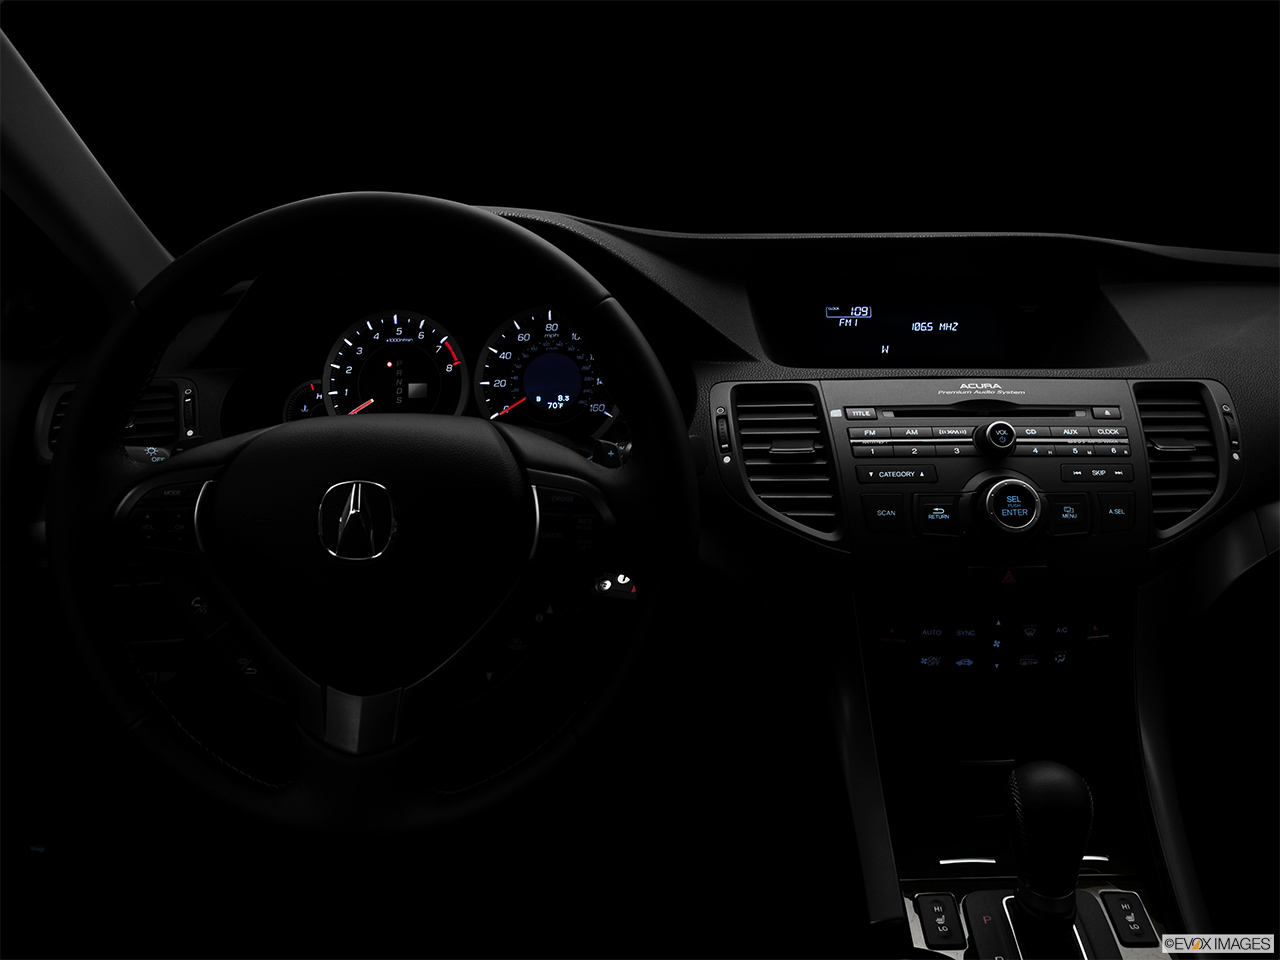 2012 Acura TSX TSX 5-speed Automatic Centered wide dash shot - "night" shot. 